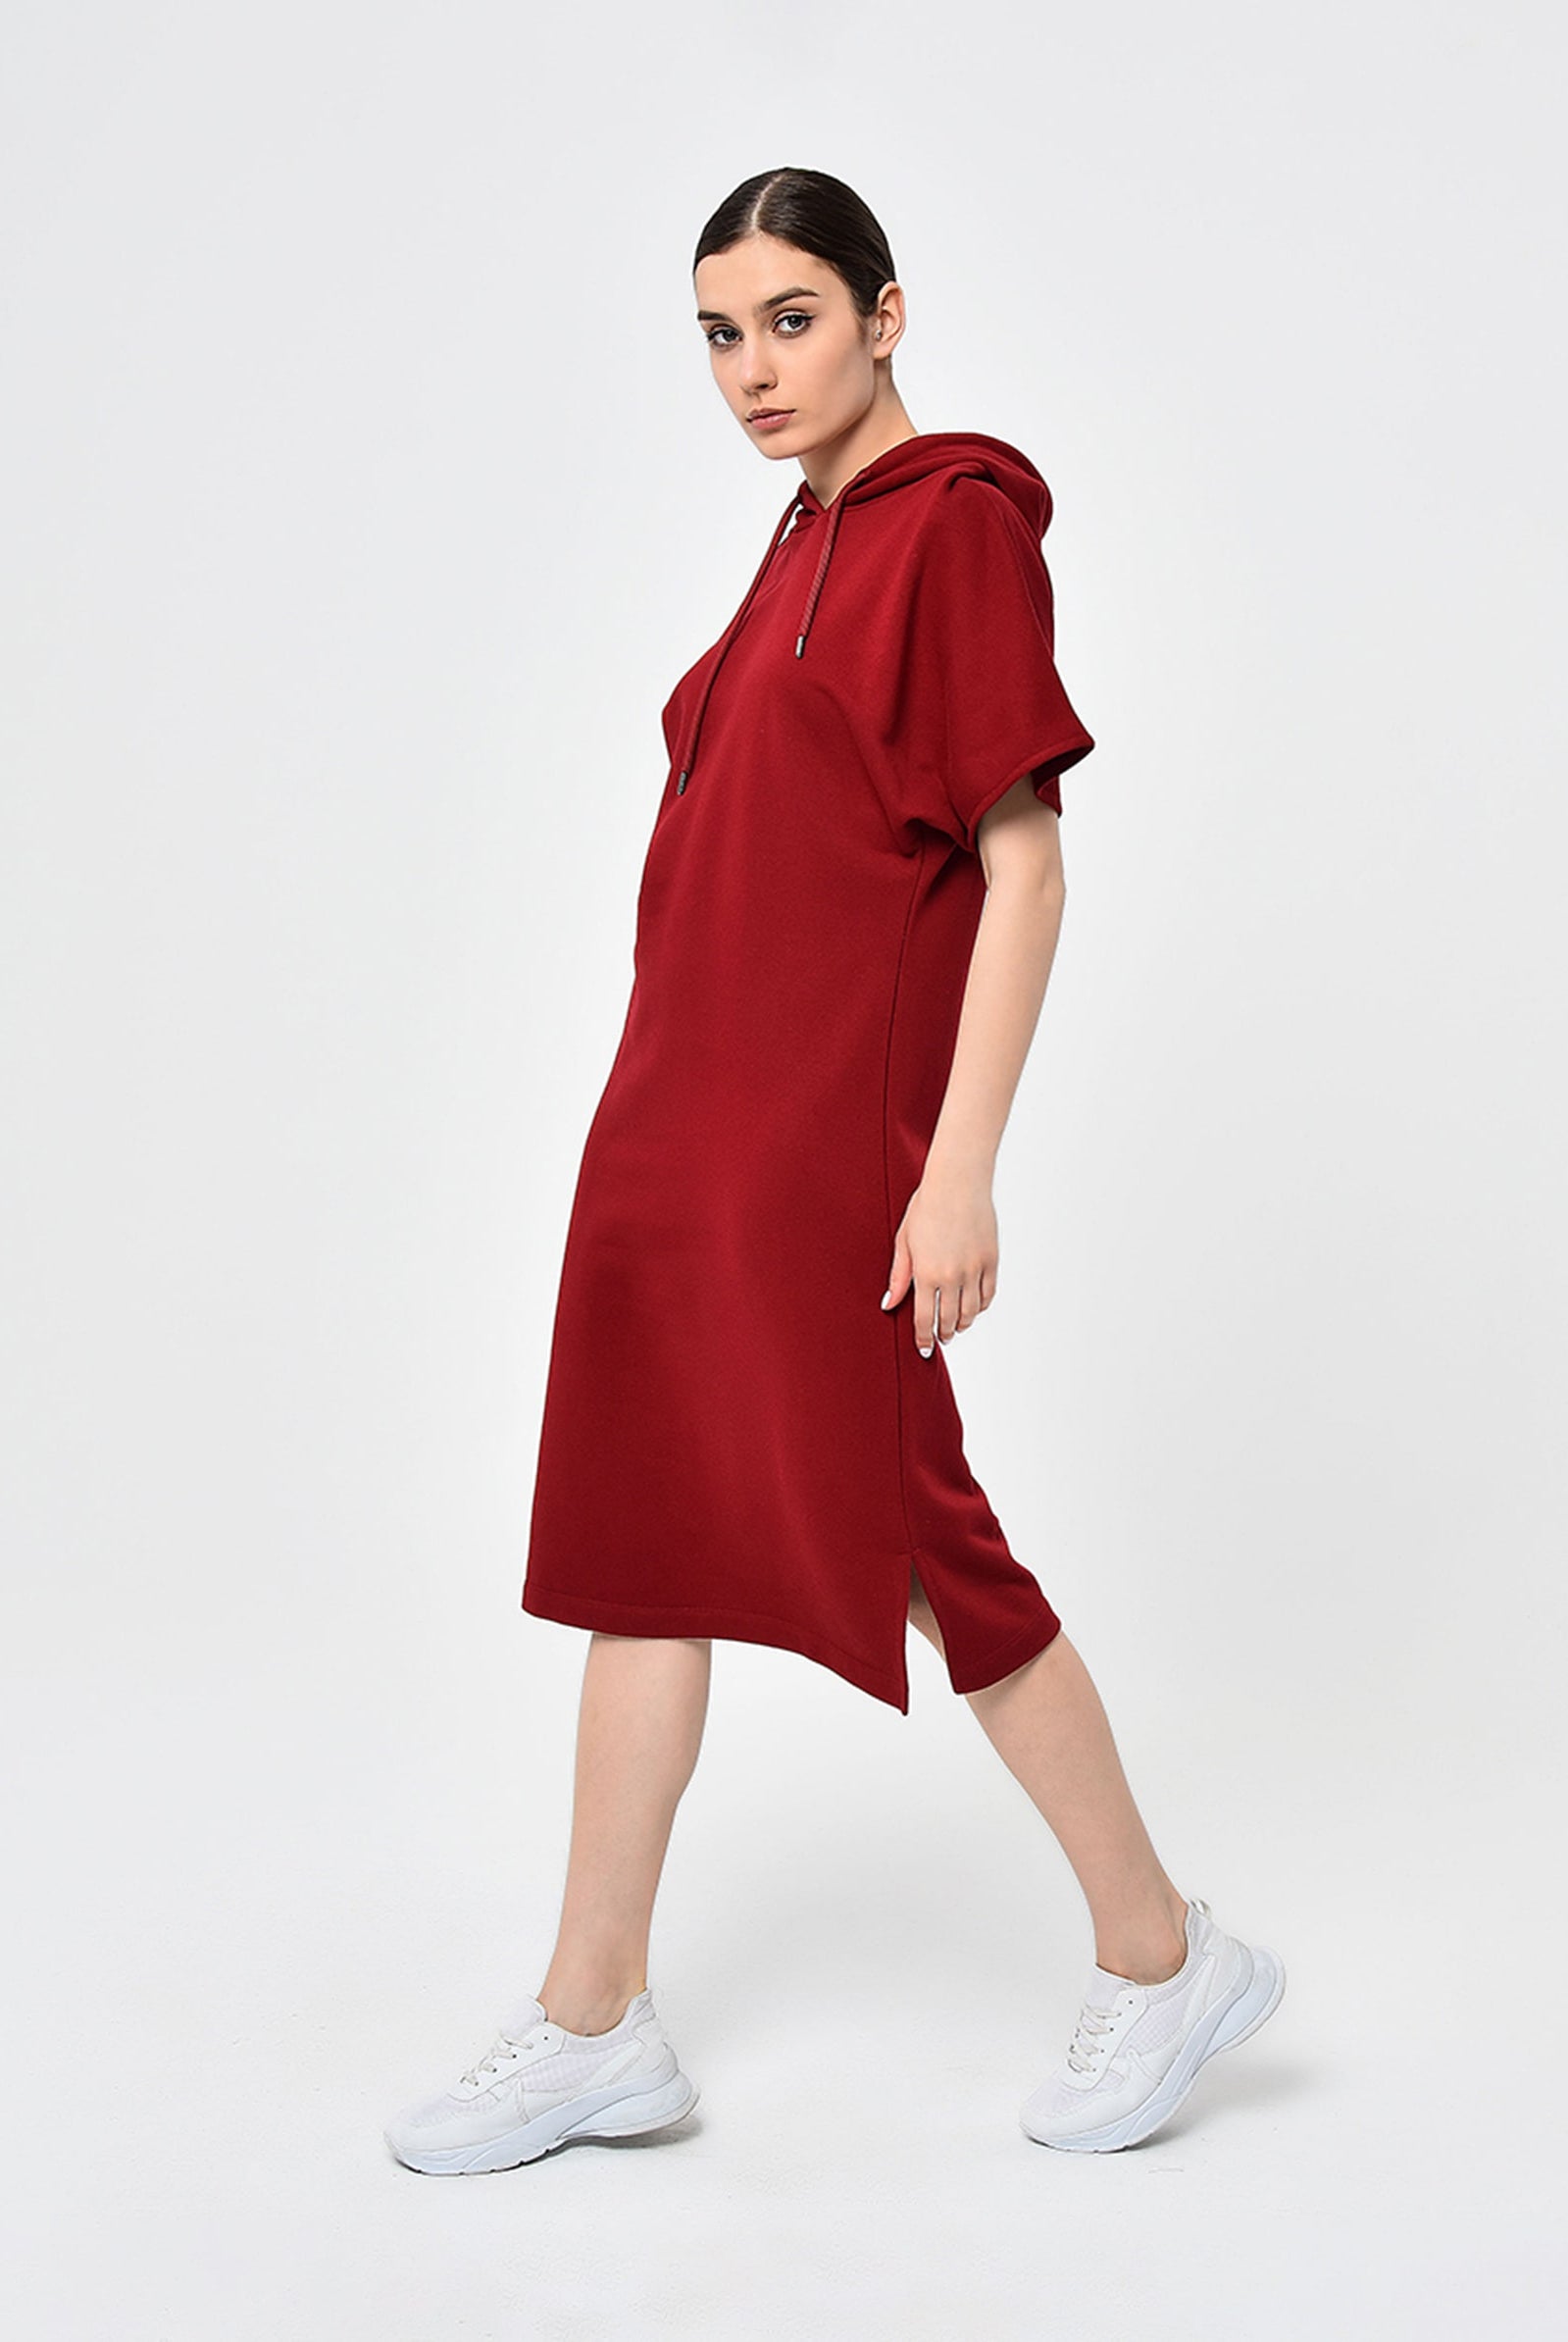 burgundy short sleeve dress